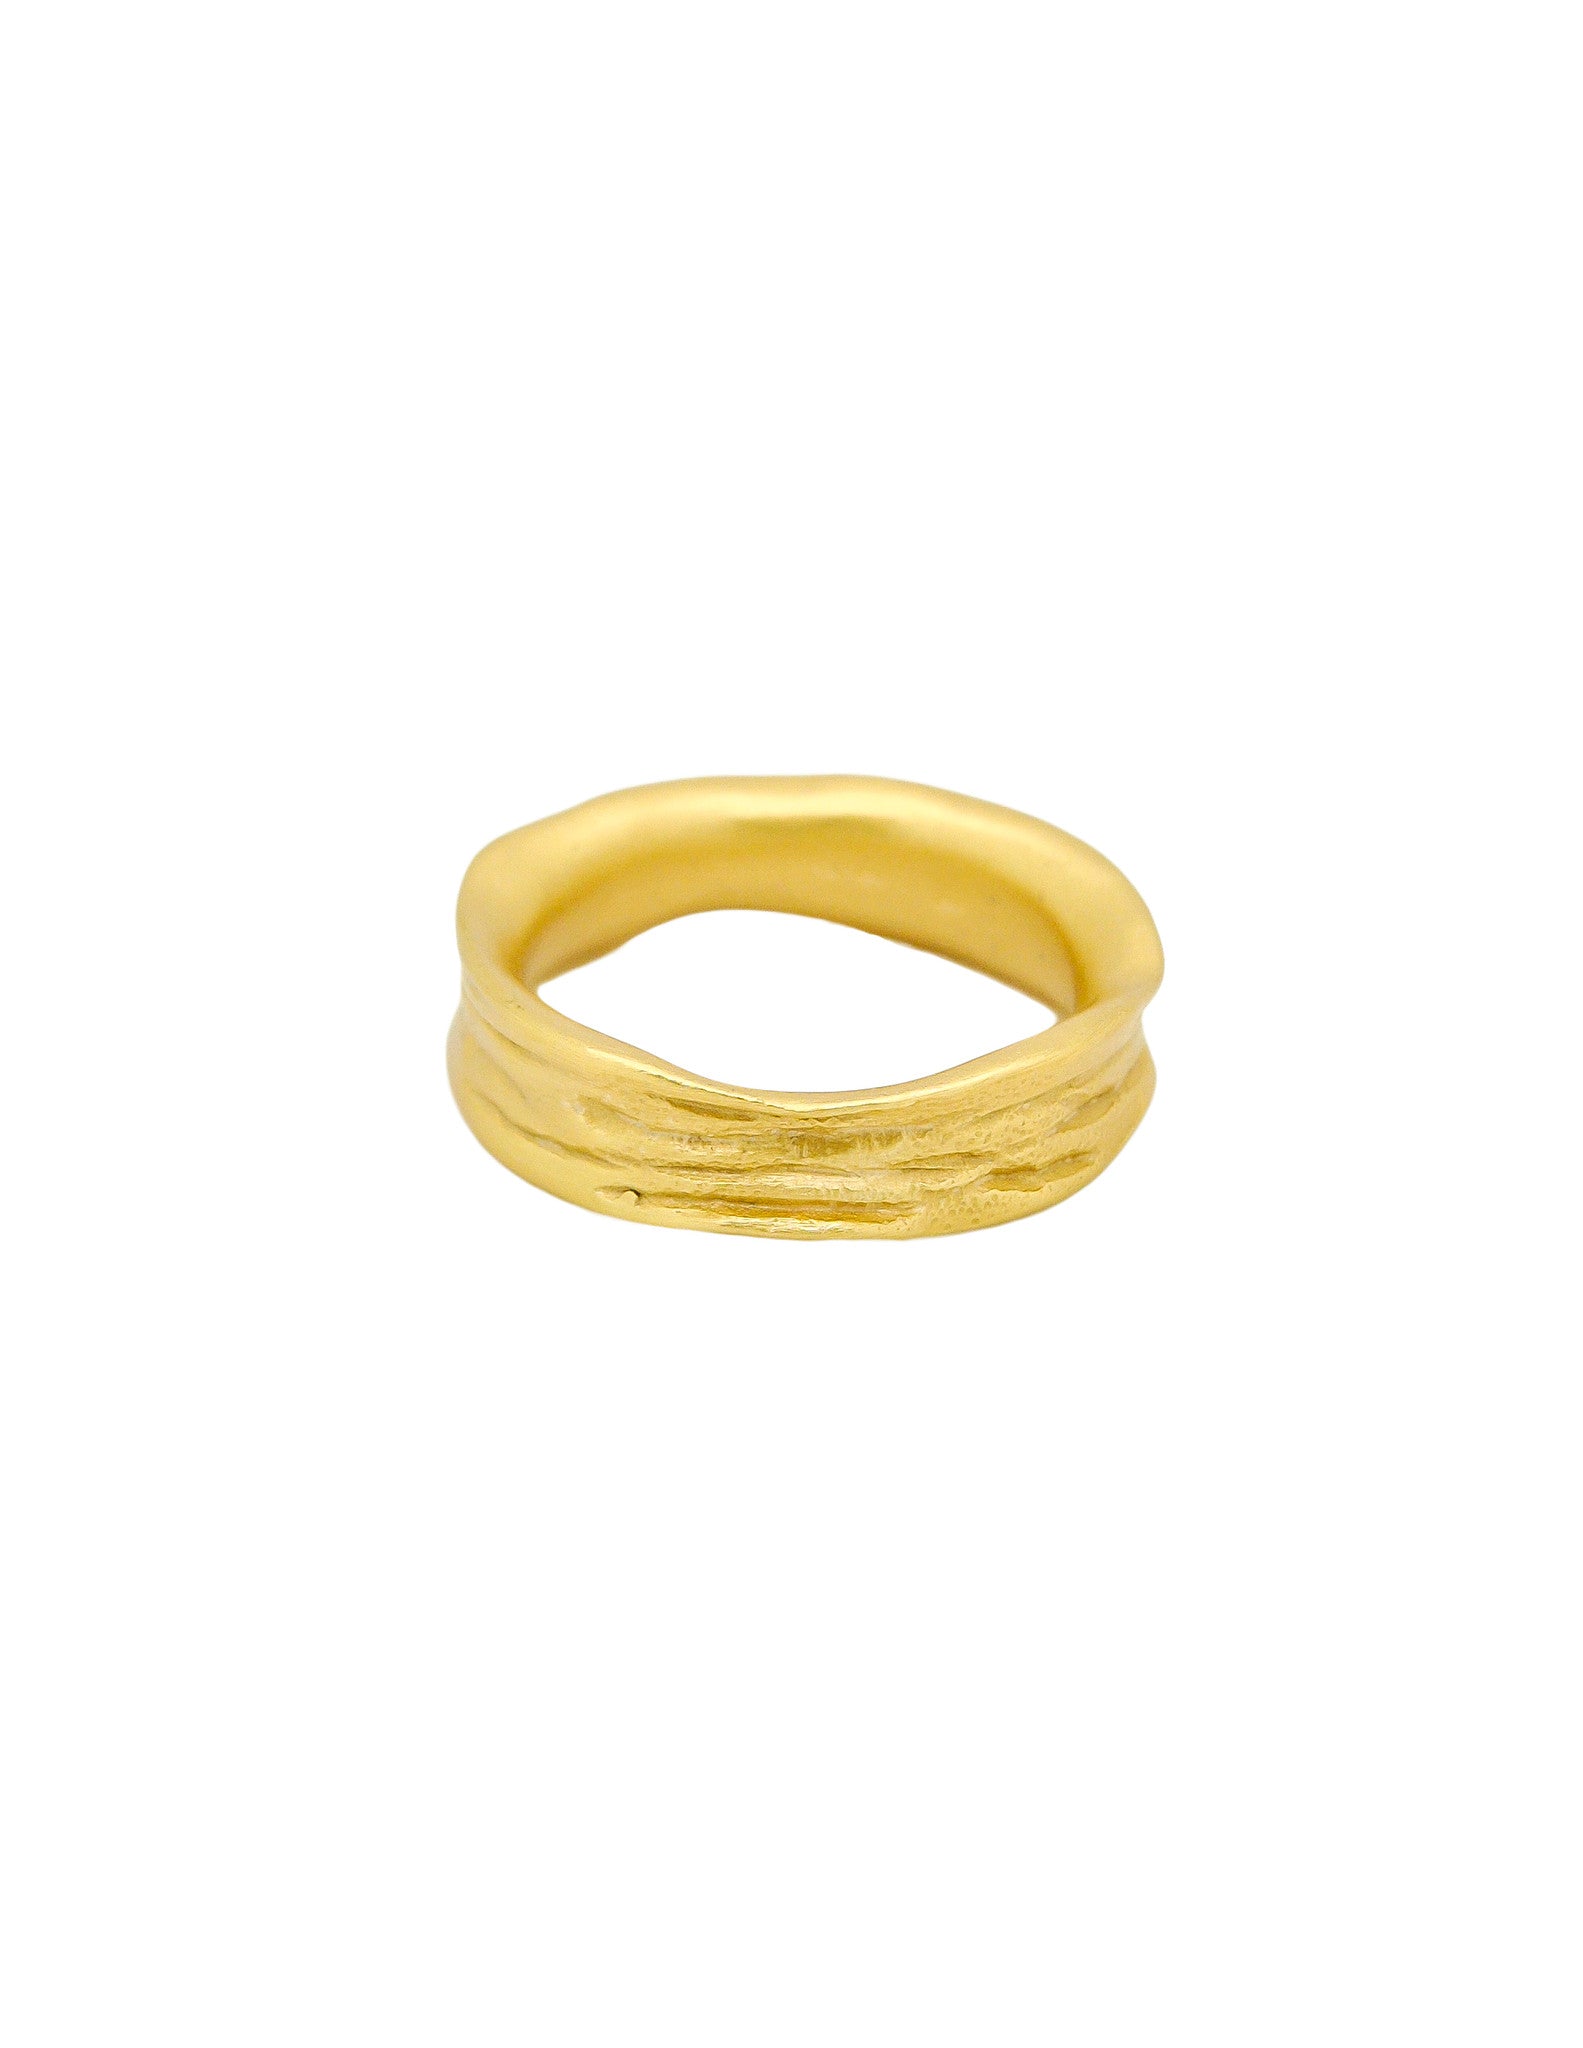 YSL Vintage Gold Carved Artisan Ring - Amarcord Vintage Fashion
 - 1